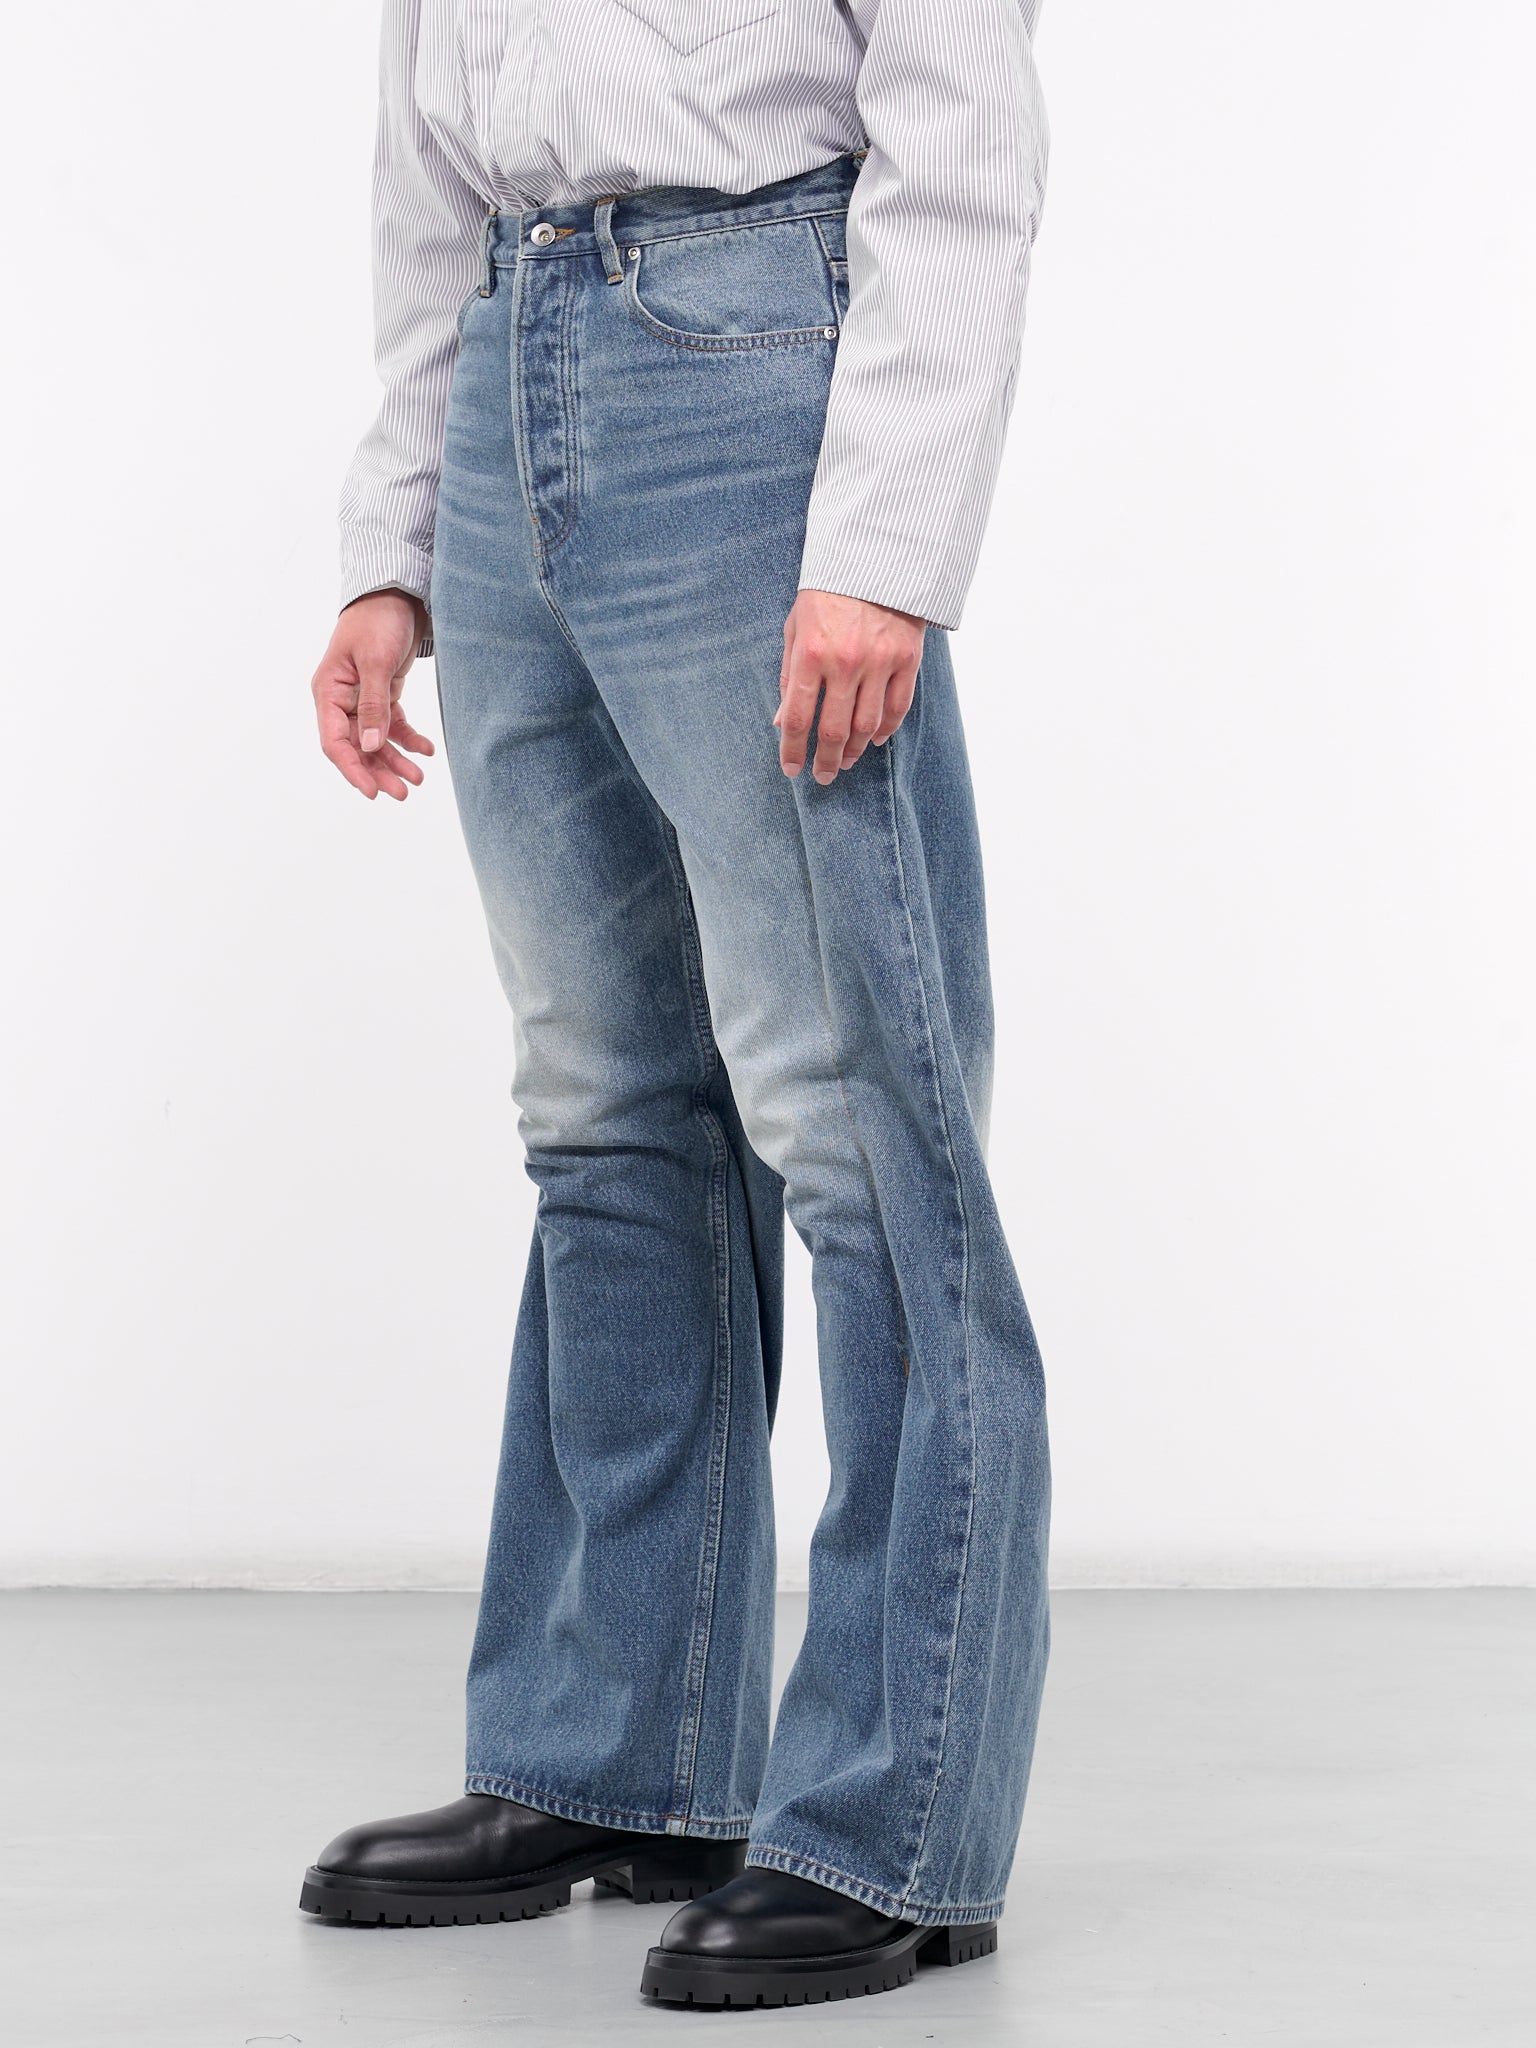 Faded Denim Jeans (JN-WLSL1-915-686-NAVY)